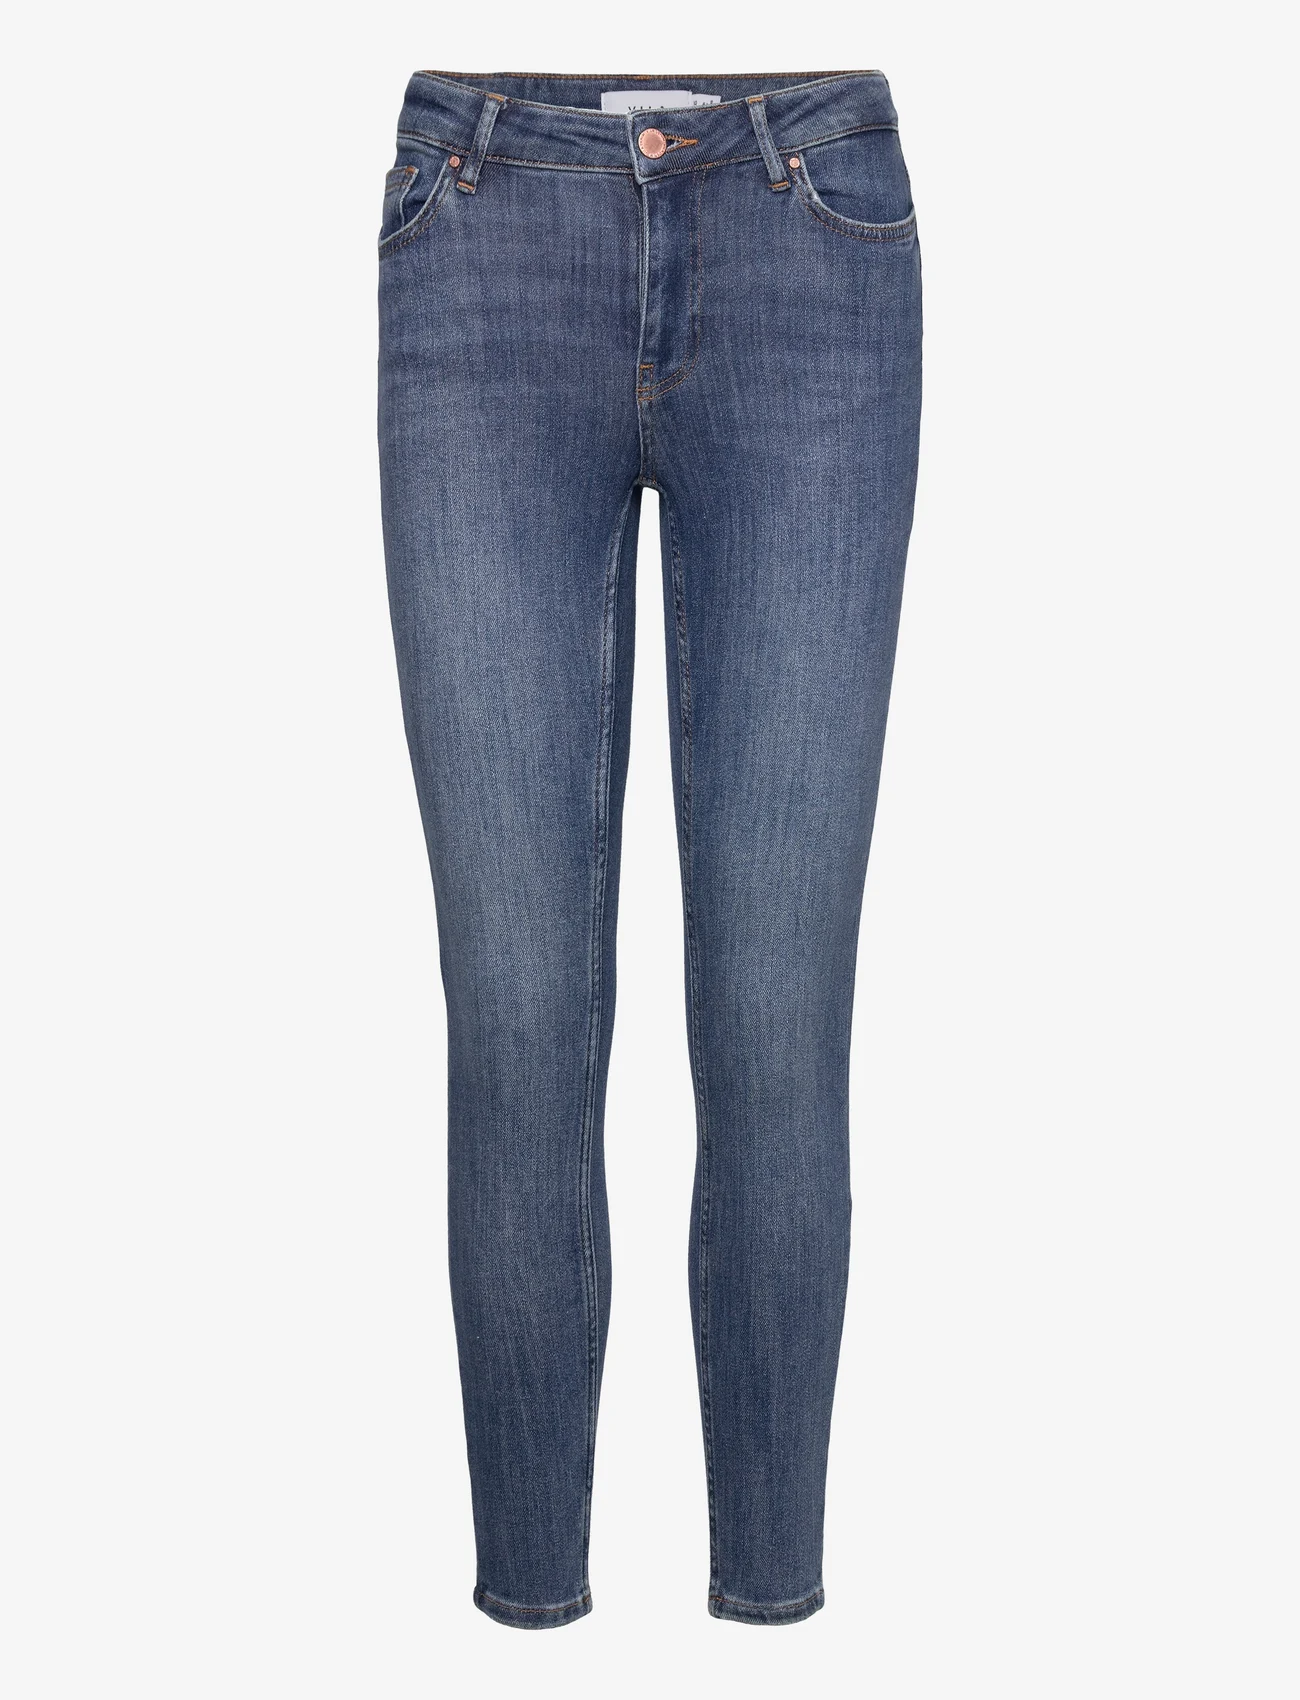 Vila - VISARAH WU02 RW SKINNY JEANS - NOOS - skinny jeans - medium blue denim - 0